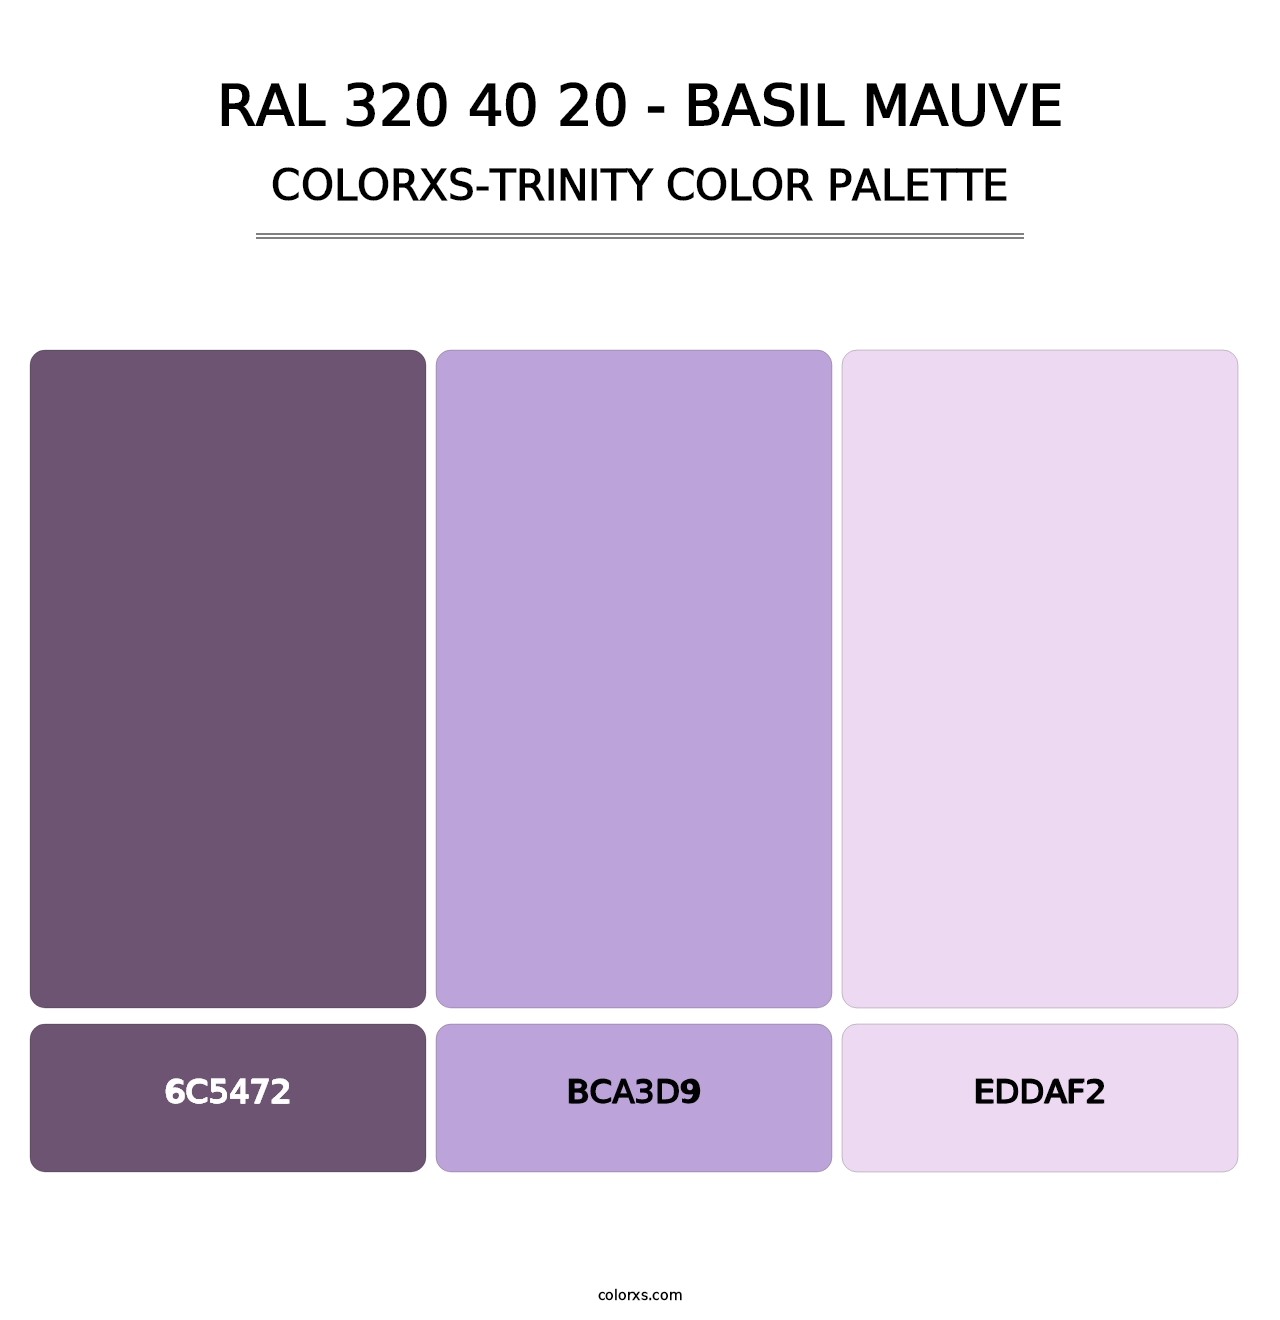 RAL 320 40 20 - Basil Mauve - Colorxs Trinity Palette